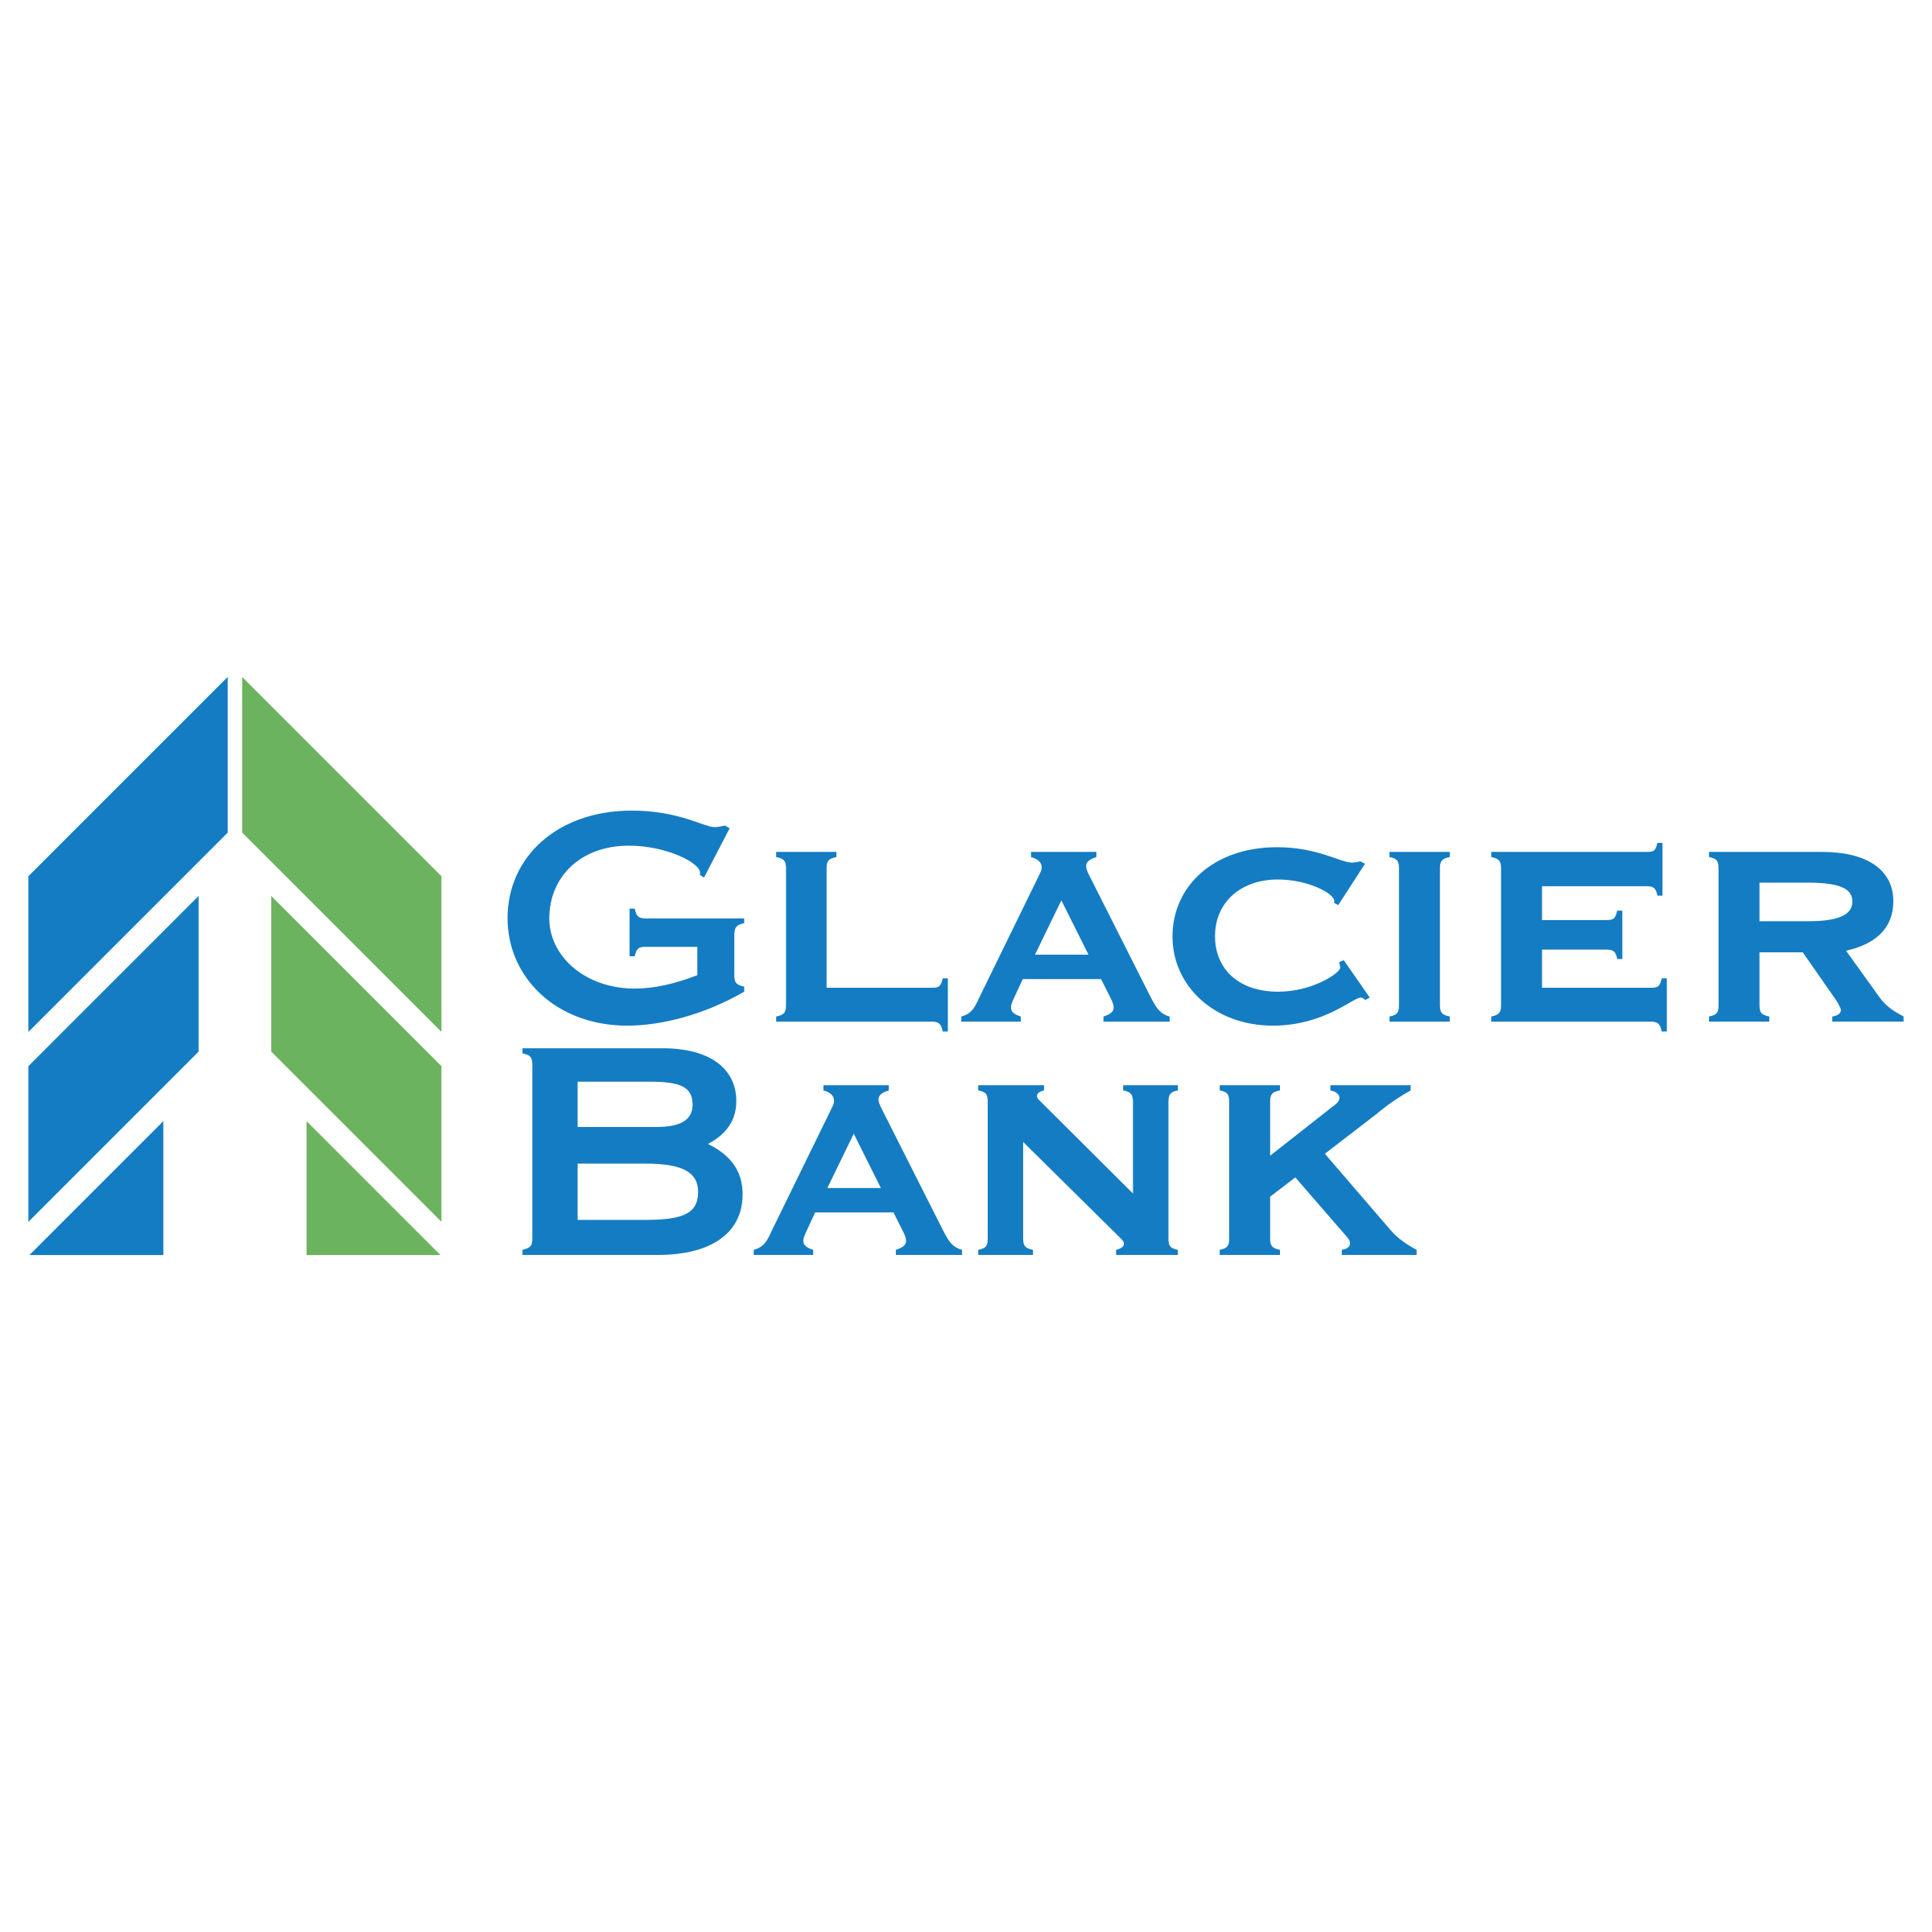 GLACIER BANK Brand Logo